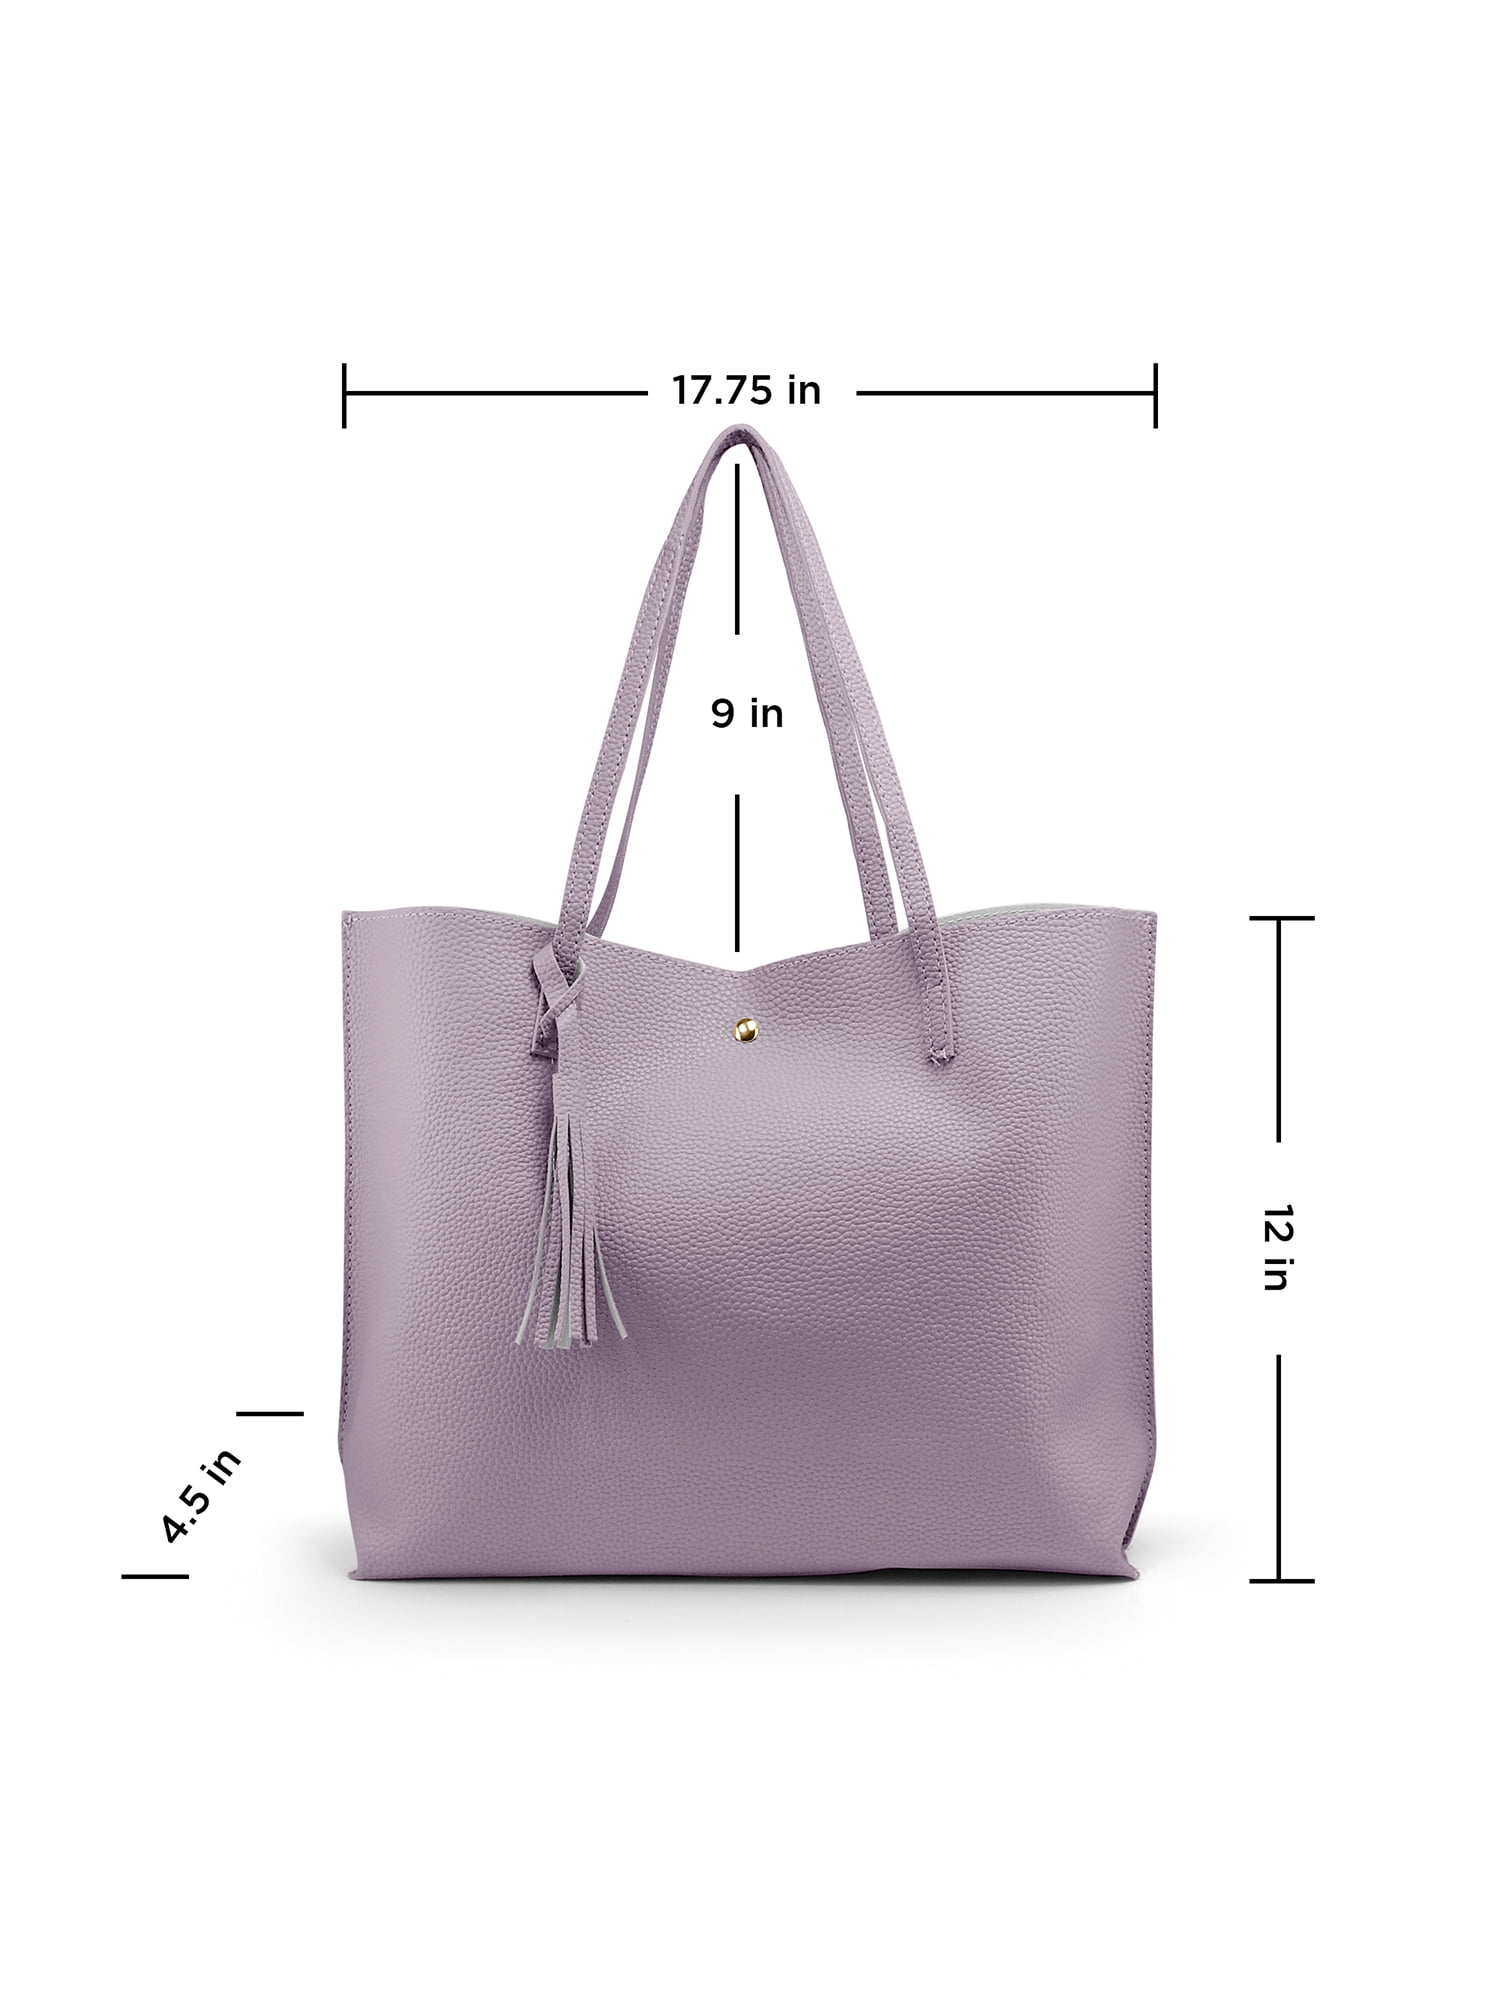 Name : Large Capacity Tassel Tote Bag Women Soft Leather Ladies Handbag  Crossbody Messenger Bags Female Purse Shoulder Bag